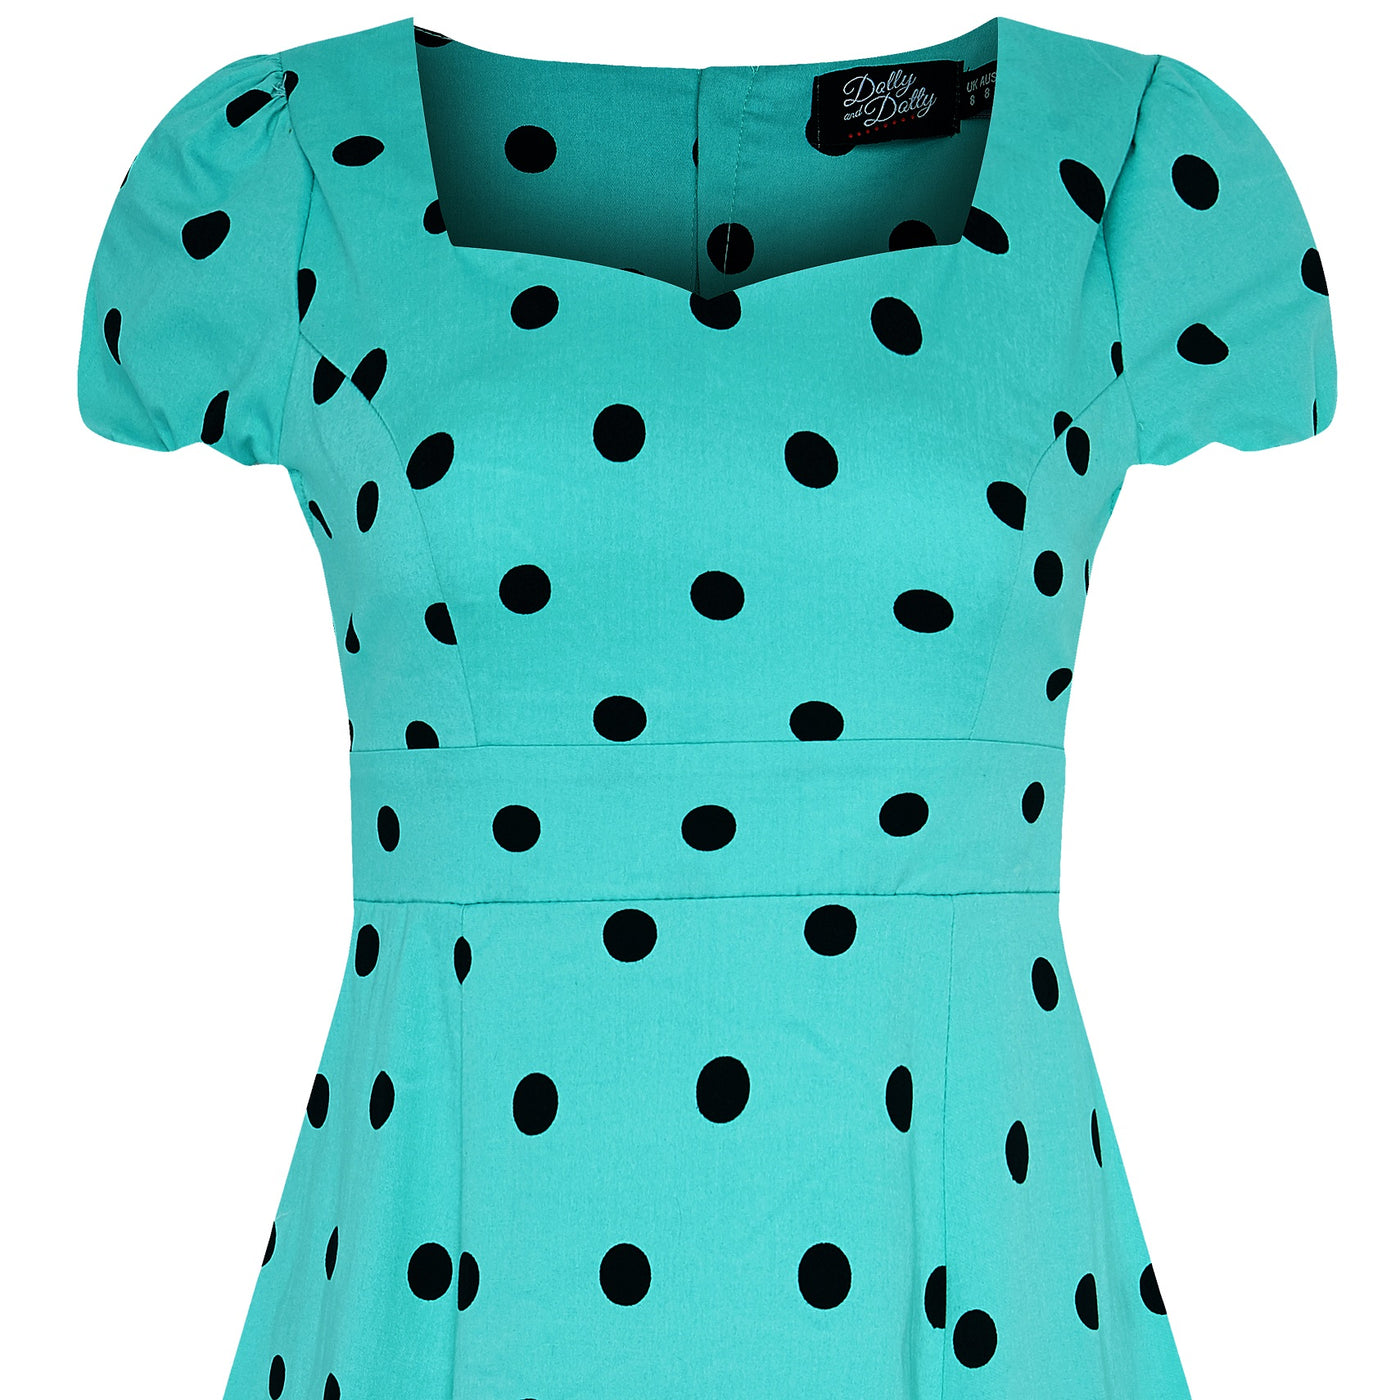 Claudia Flirty Fifties Style Polka Dot Dress Turquoise & Black